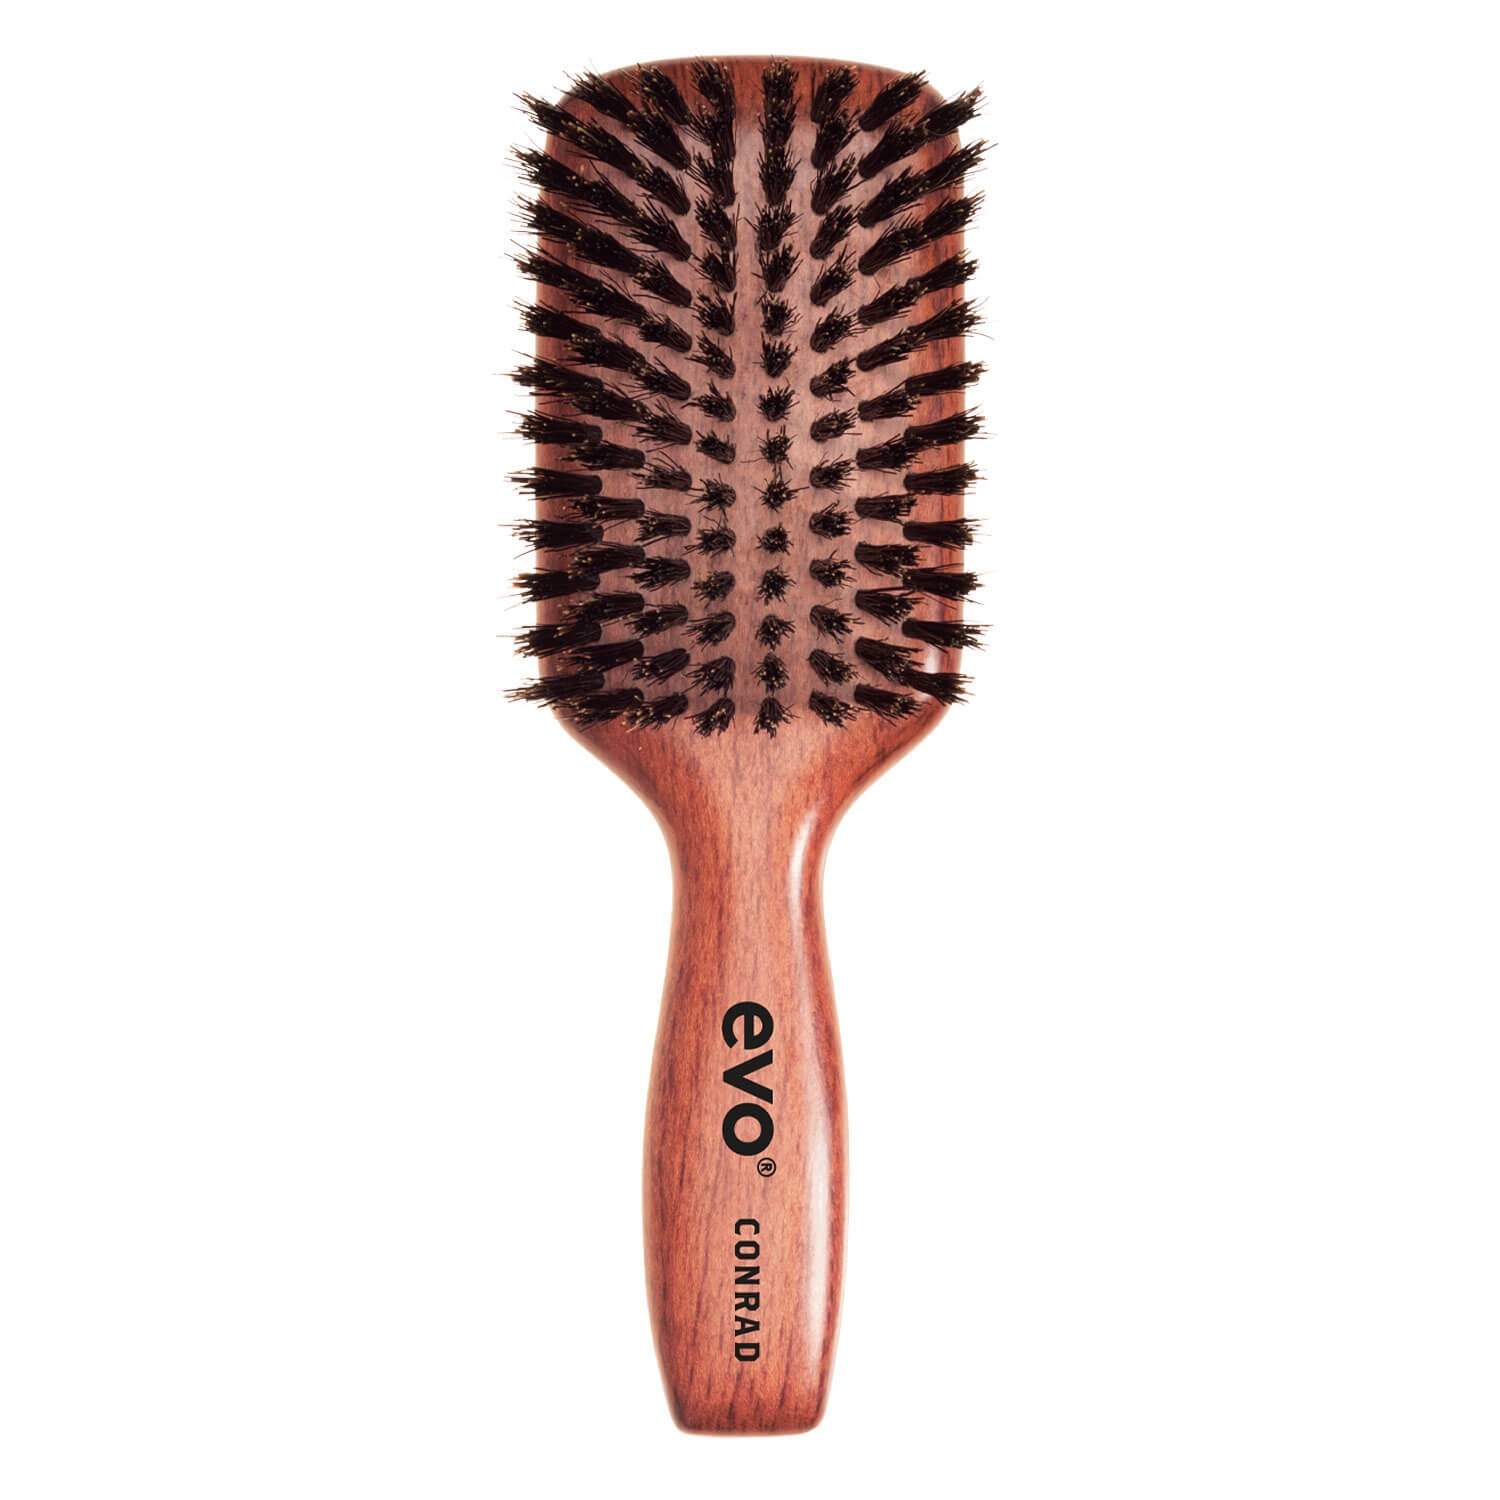 Produktbild von evo brushes - conrad bristle paddle brush